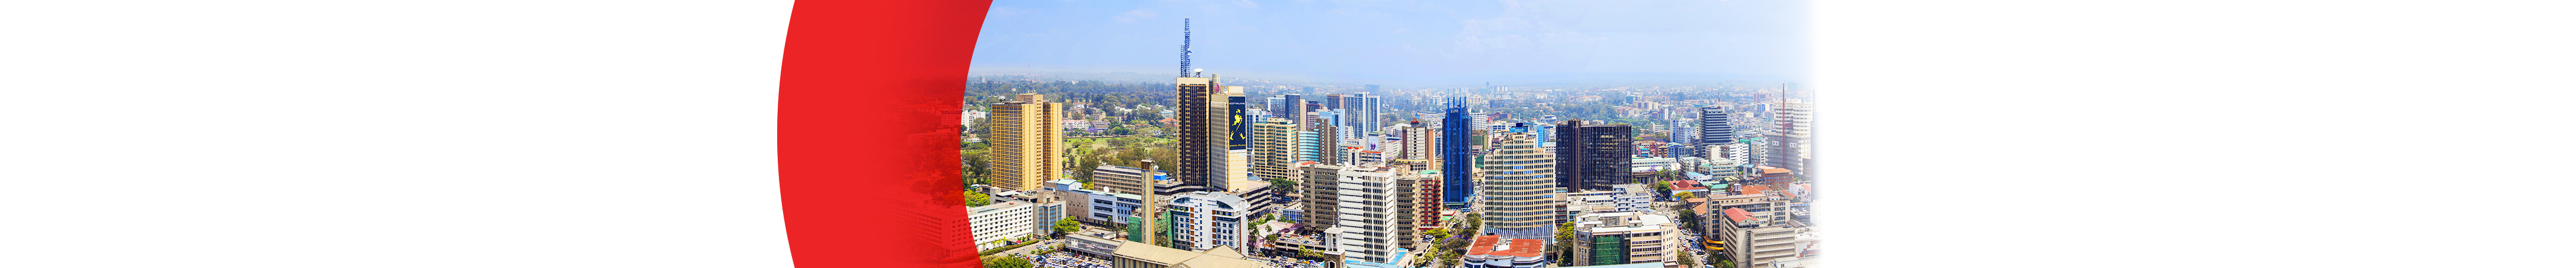 banner_markets_kenya